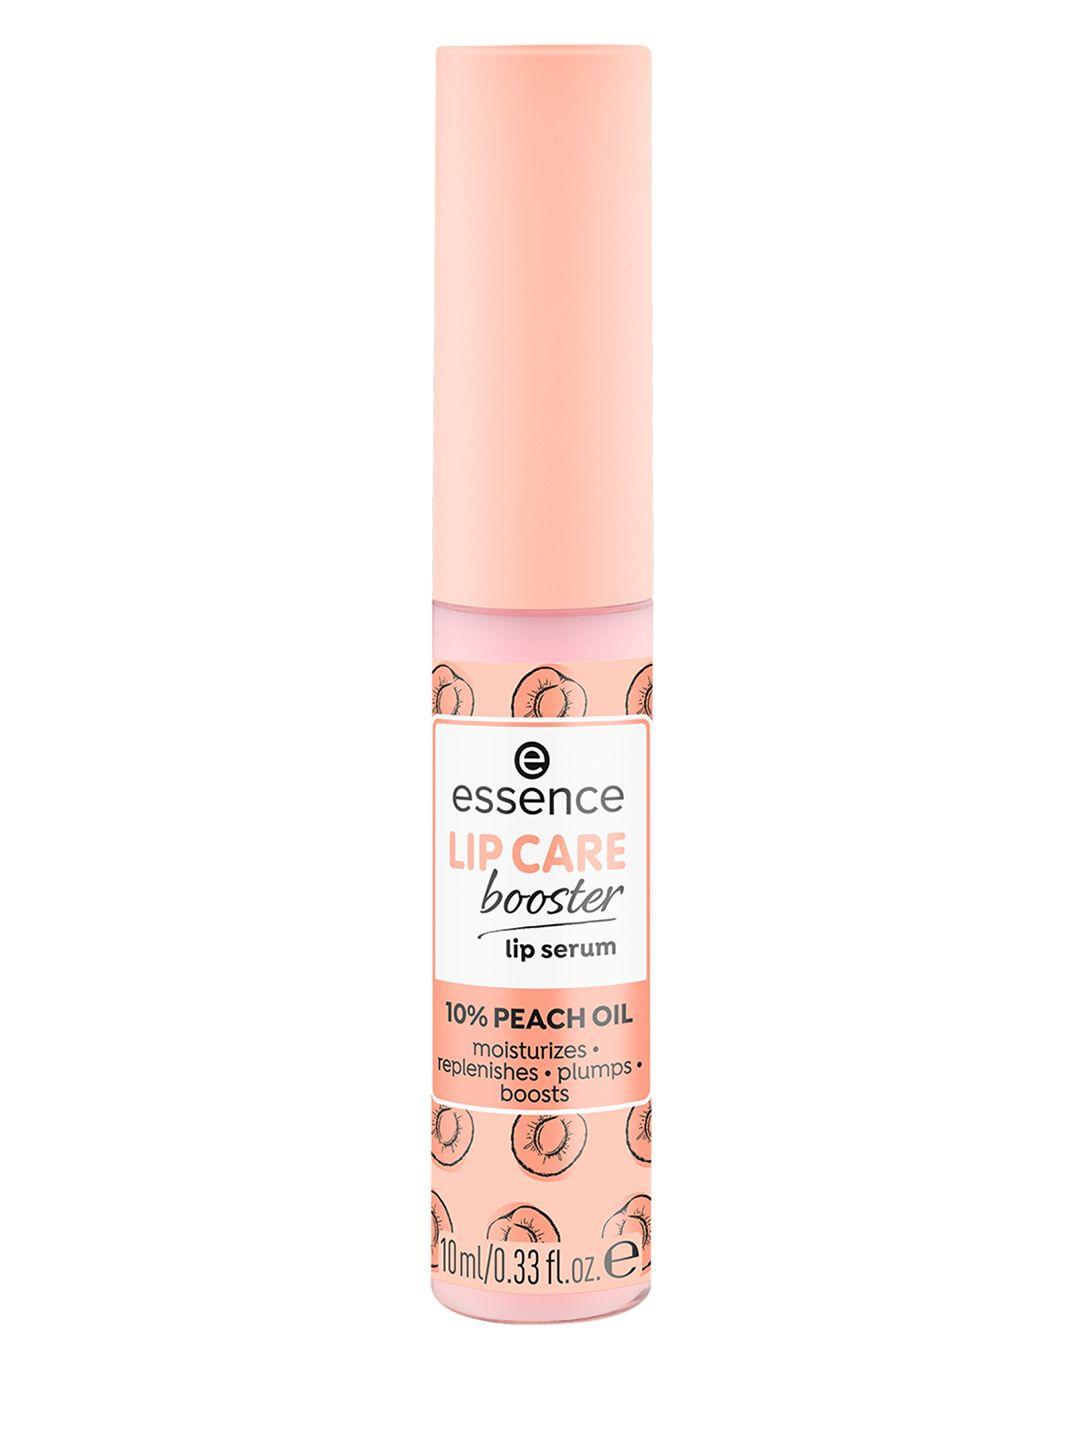 essence lip care booster lip serum with 10% peach oil - 10ml